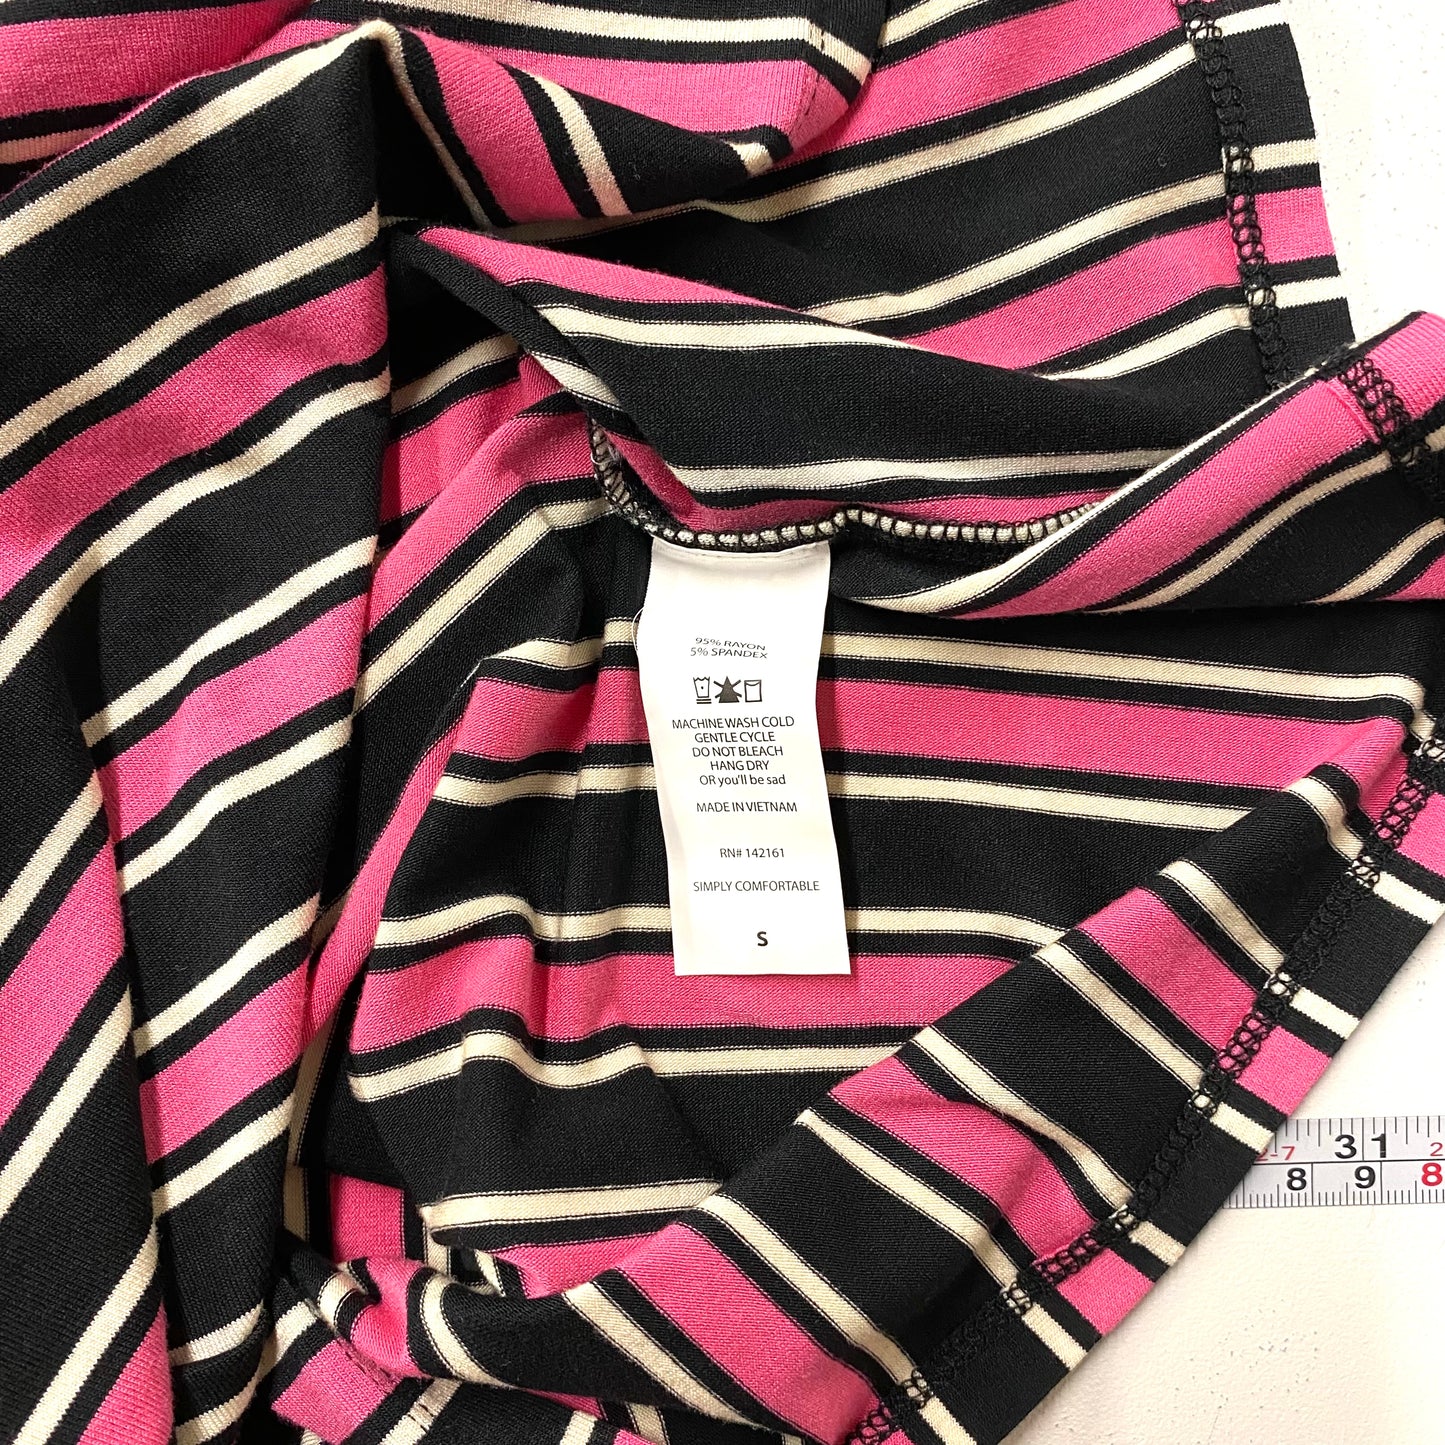 LuLaRoe Womens S Pink/Black/White Striped Julia Shift Dress Scoop Neck ½ Sleeves NWT